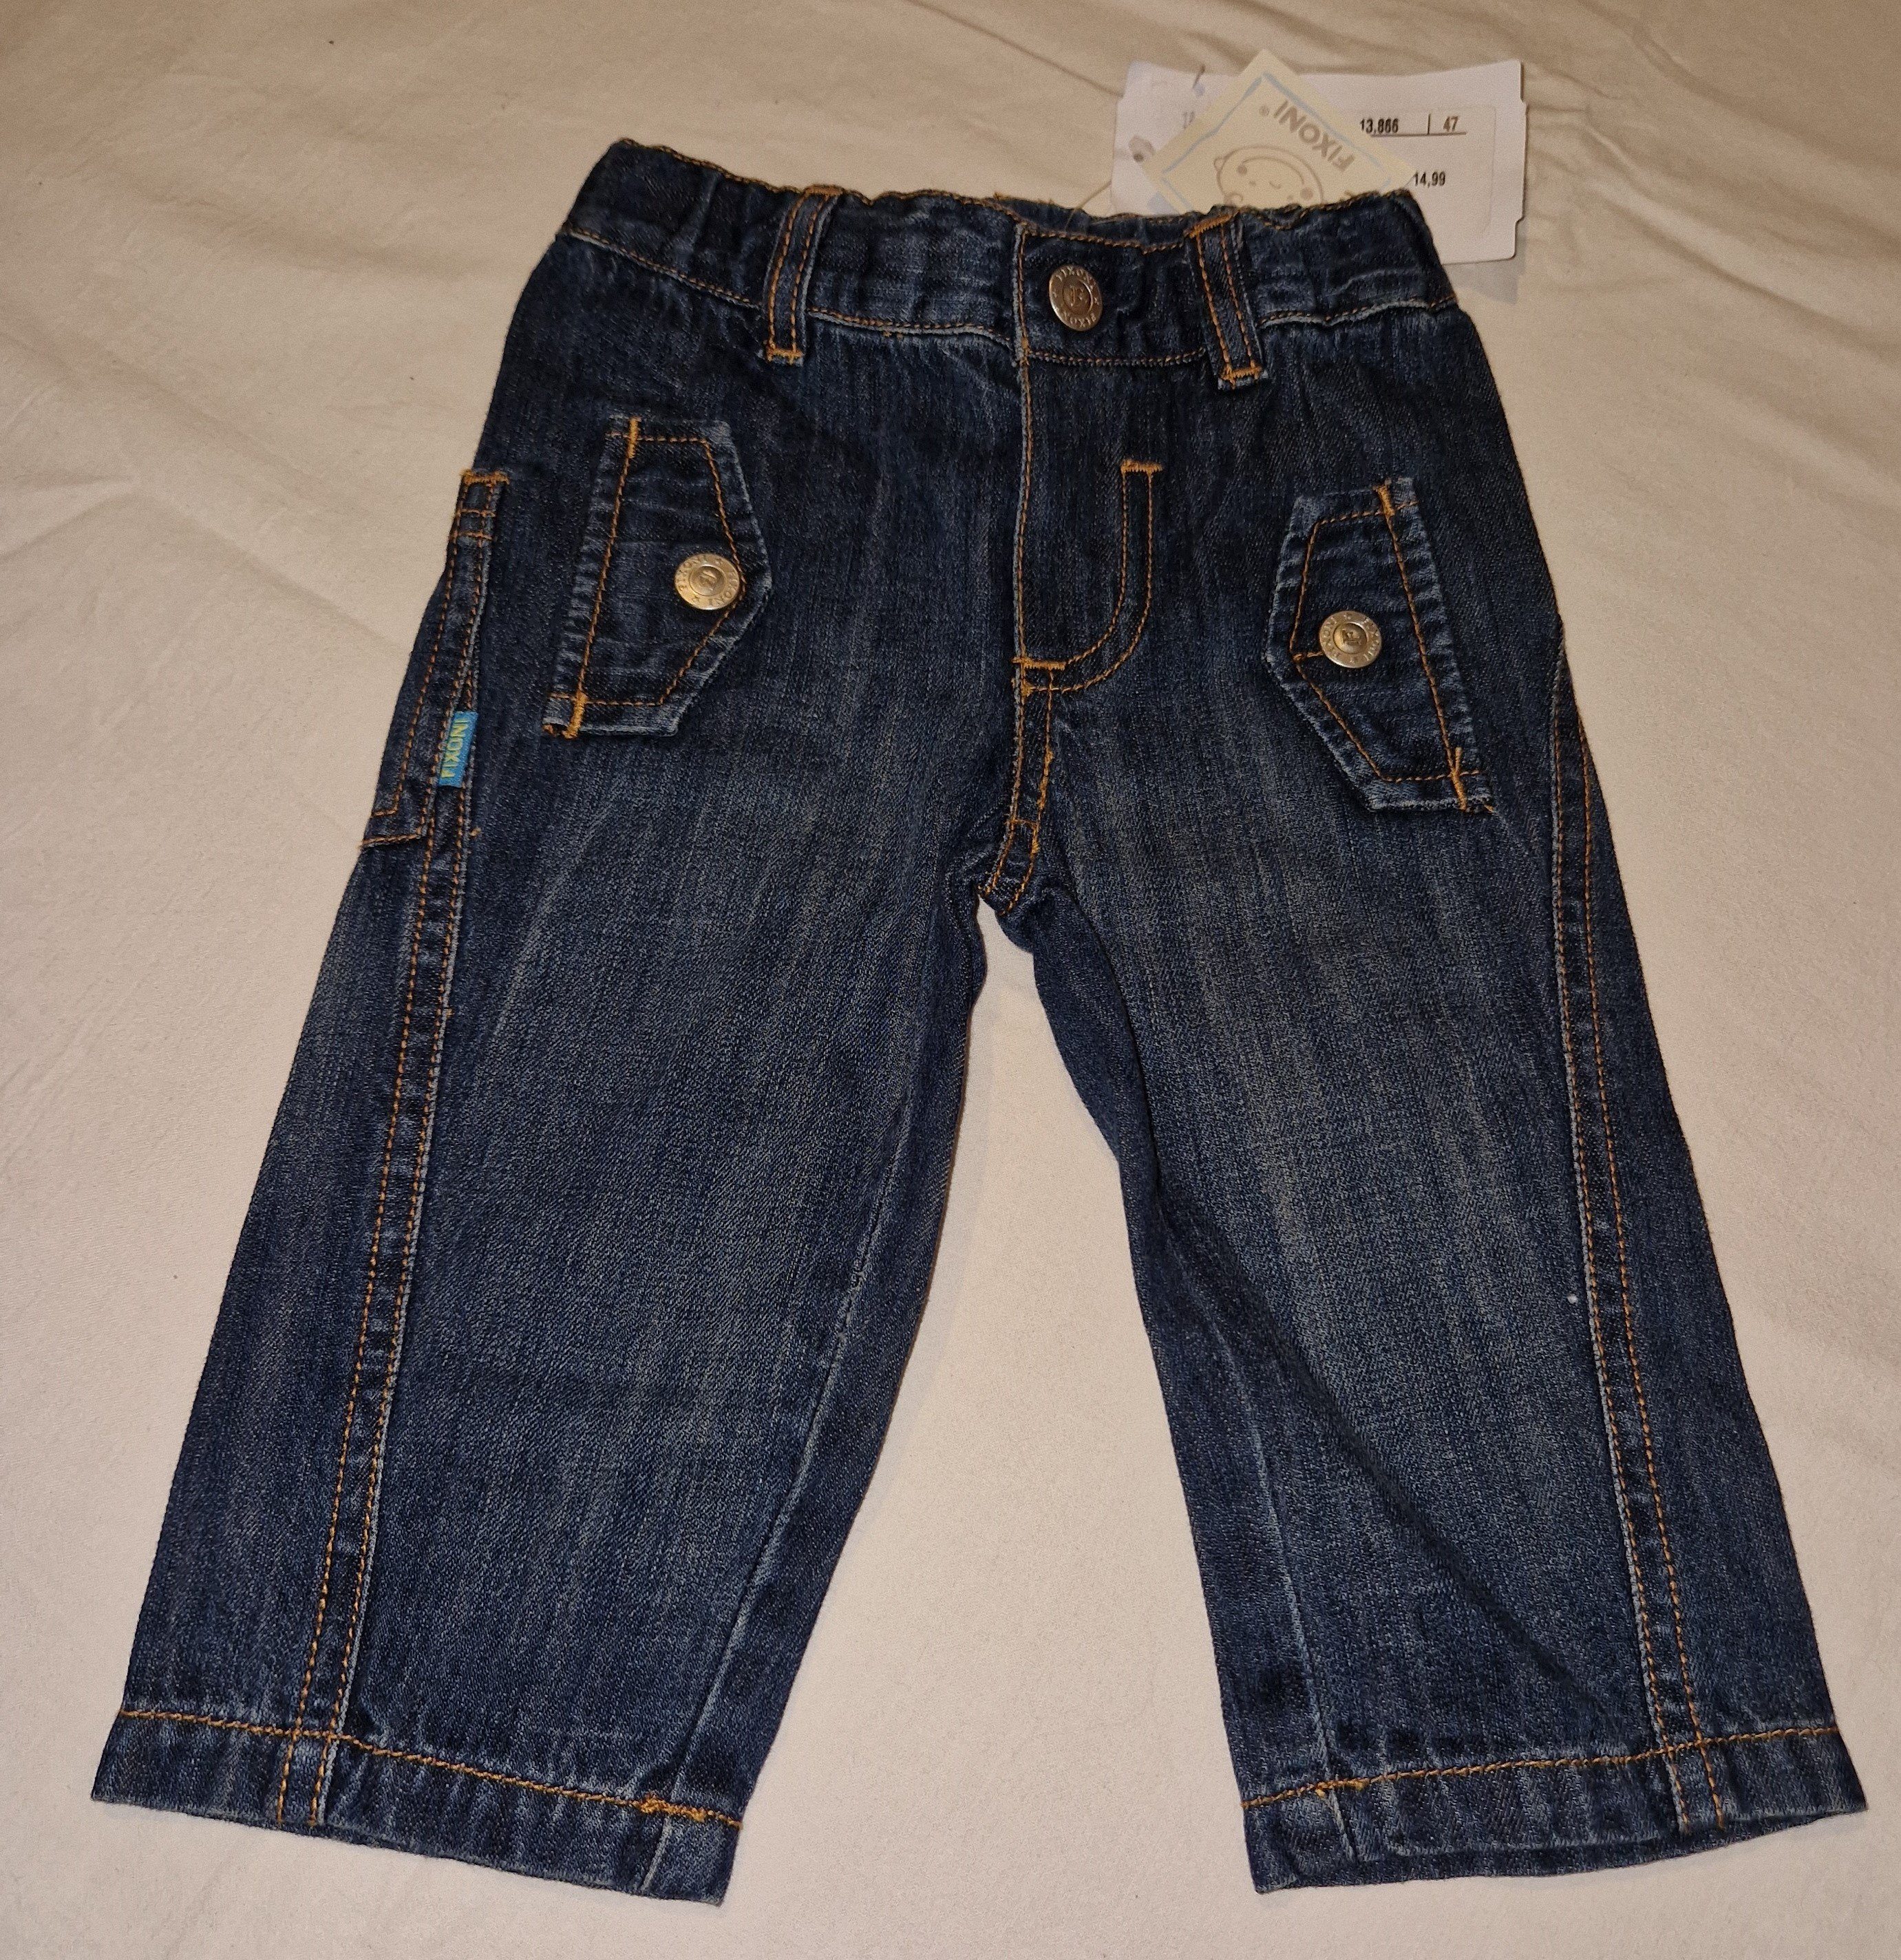 Fixoni (2211037) Bequeme blau 62/68 Größe Jungen Jeans